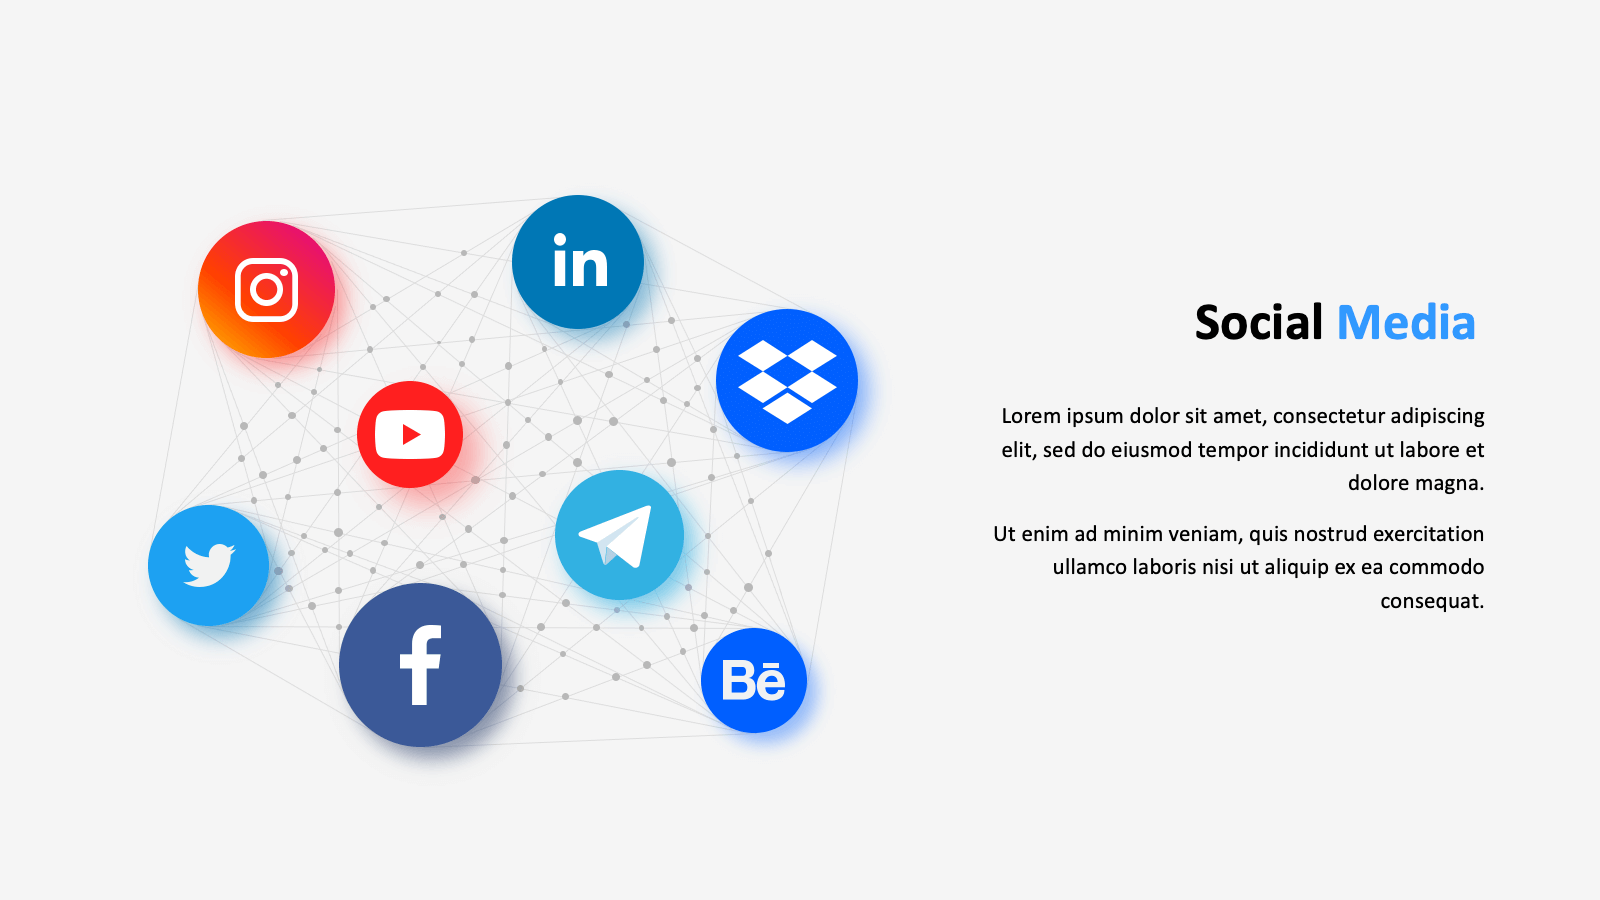 social media presentation free download